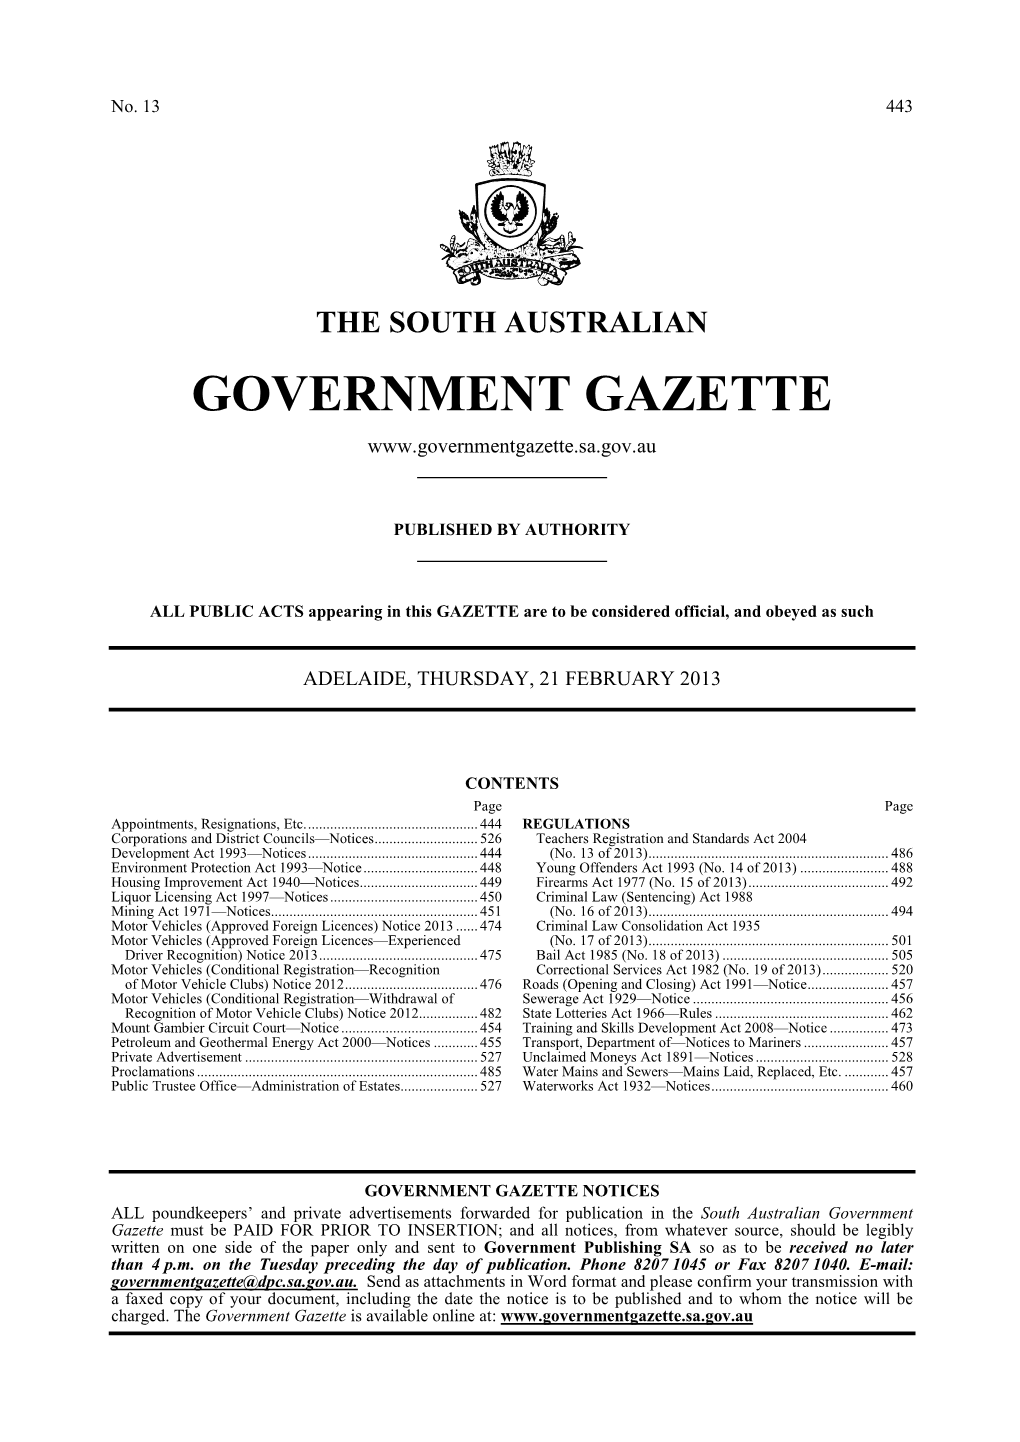 Government Gazette Pagination